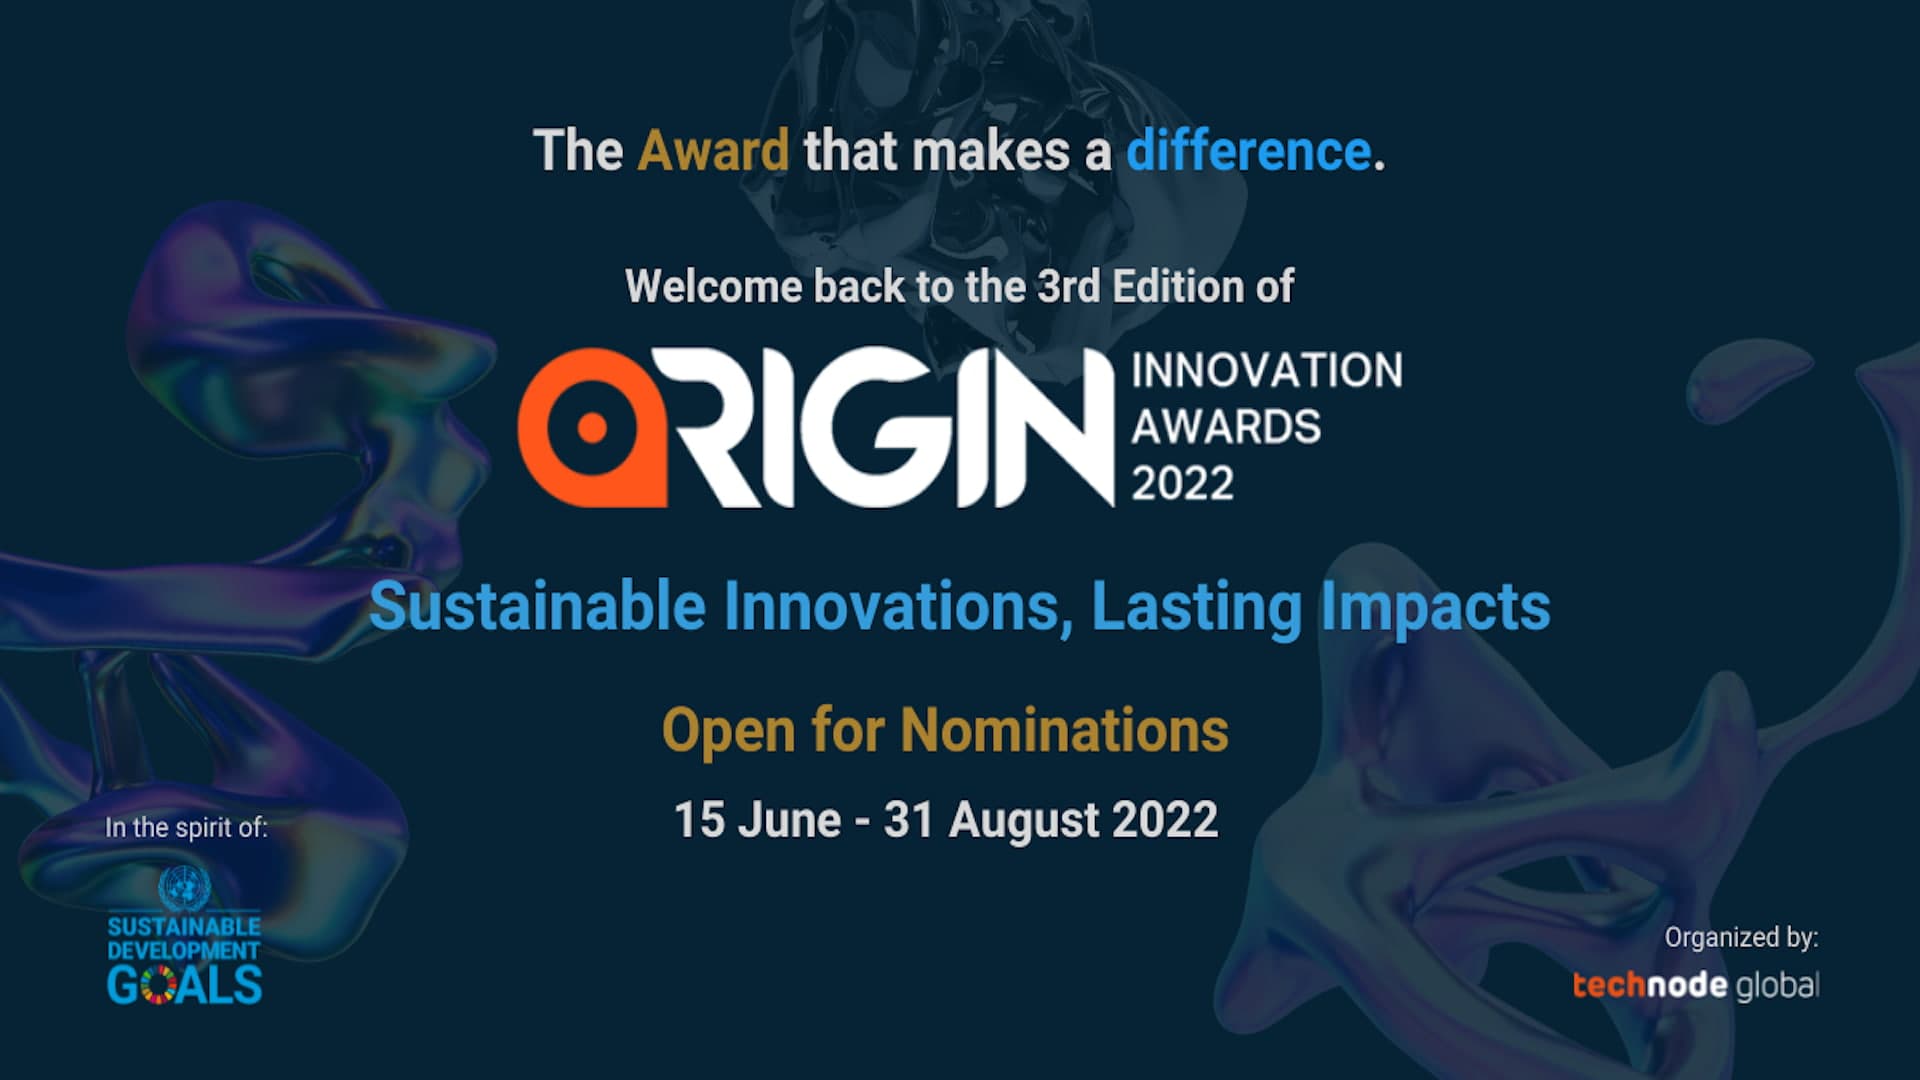 ORIGIN Innovation Awards 2022 now open for nomination